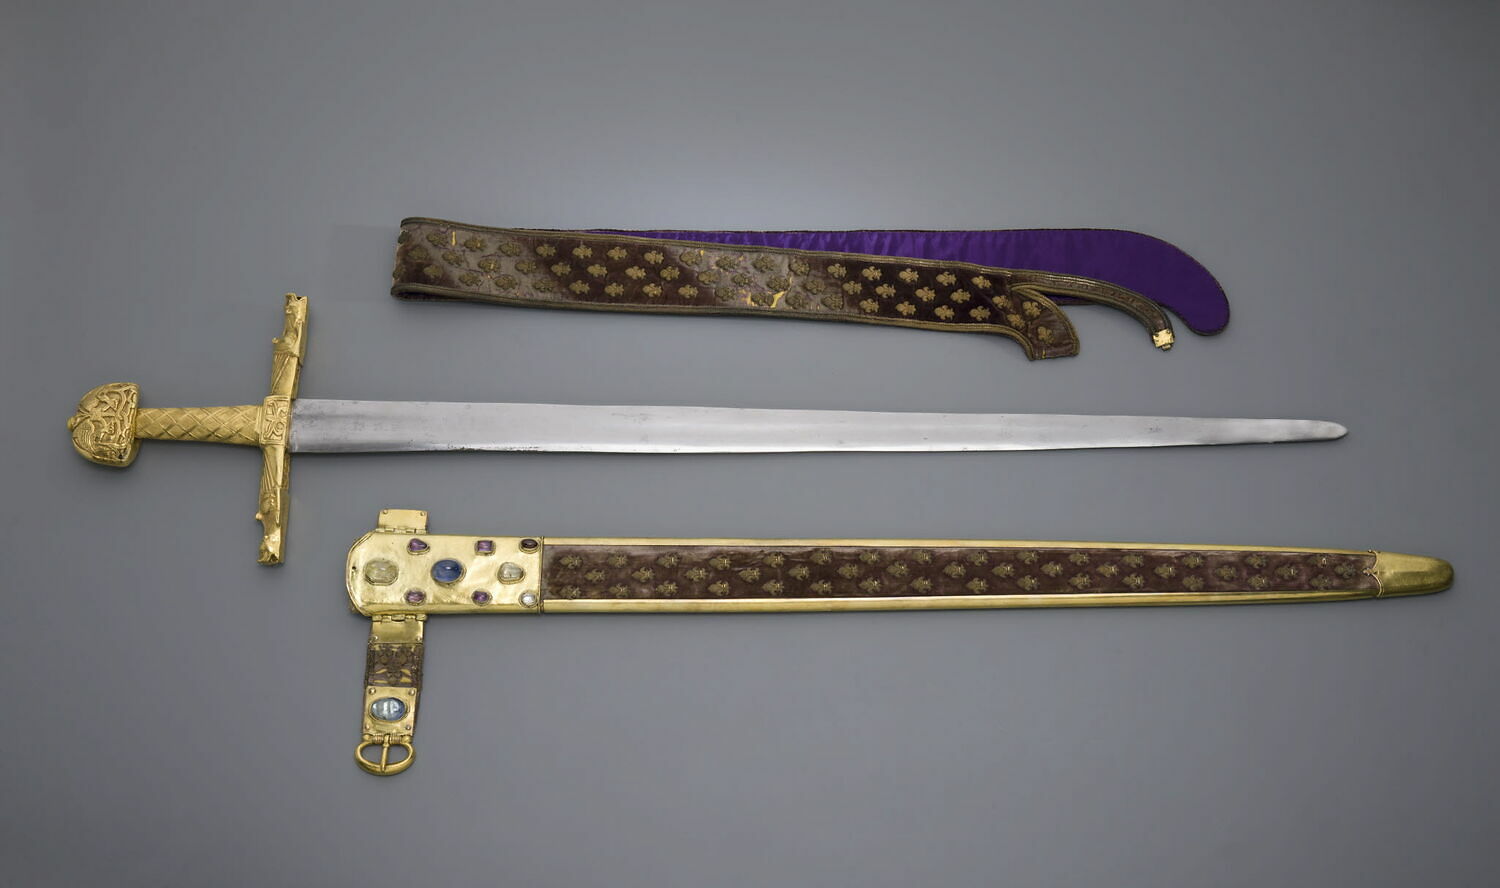 A photo of sword with a golden hilt, a golden scabbard, and a sword sling covered Fleur-de-lis symbols.